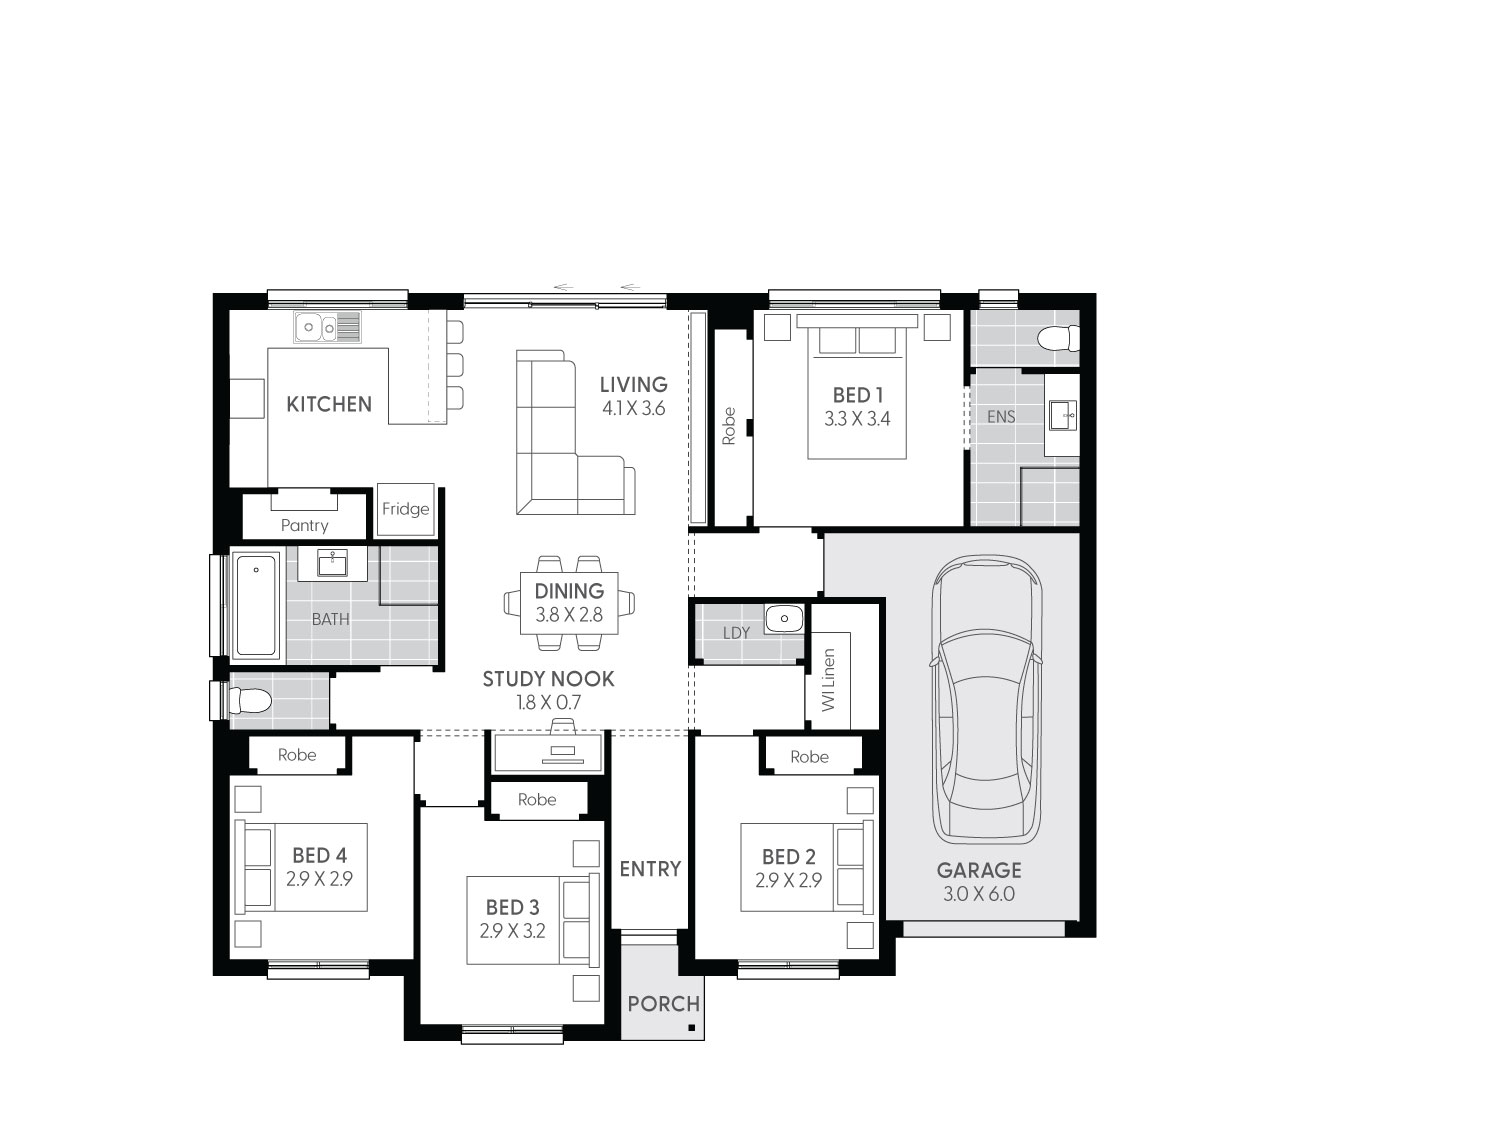 Perth16-single-storey-home-design-floor-plan-LHS.jpg 